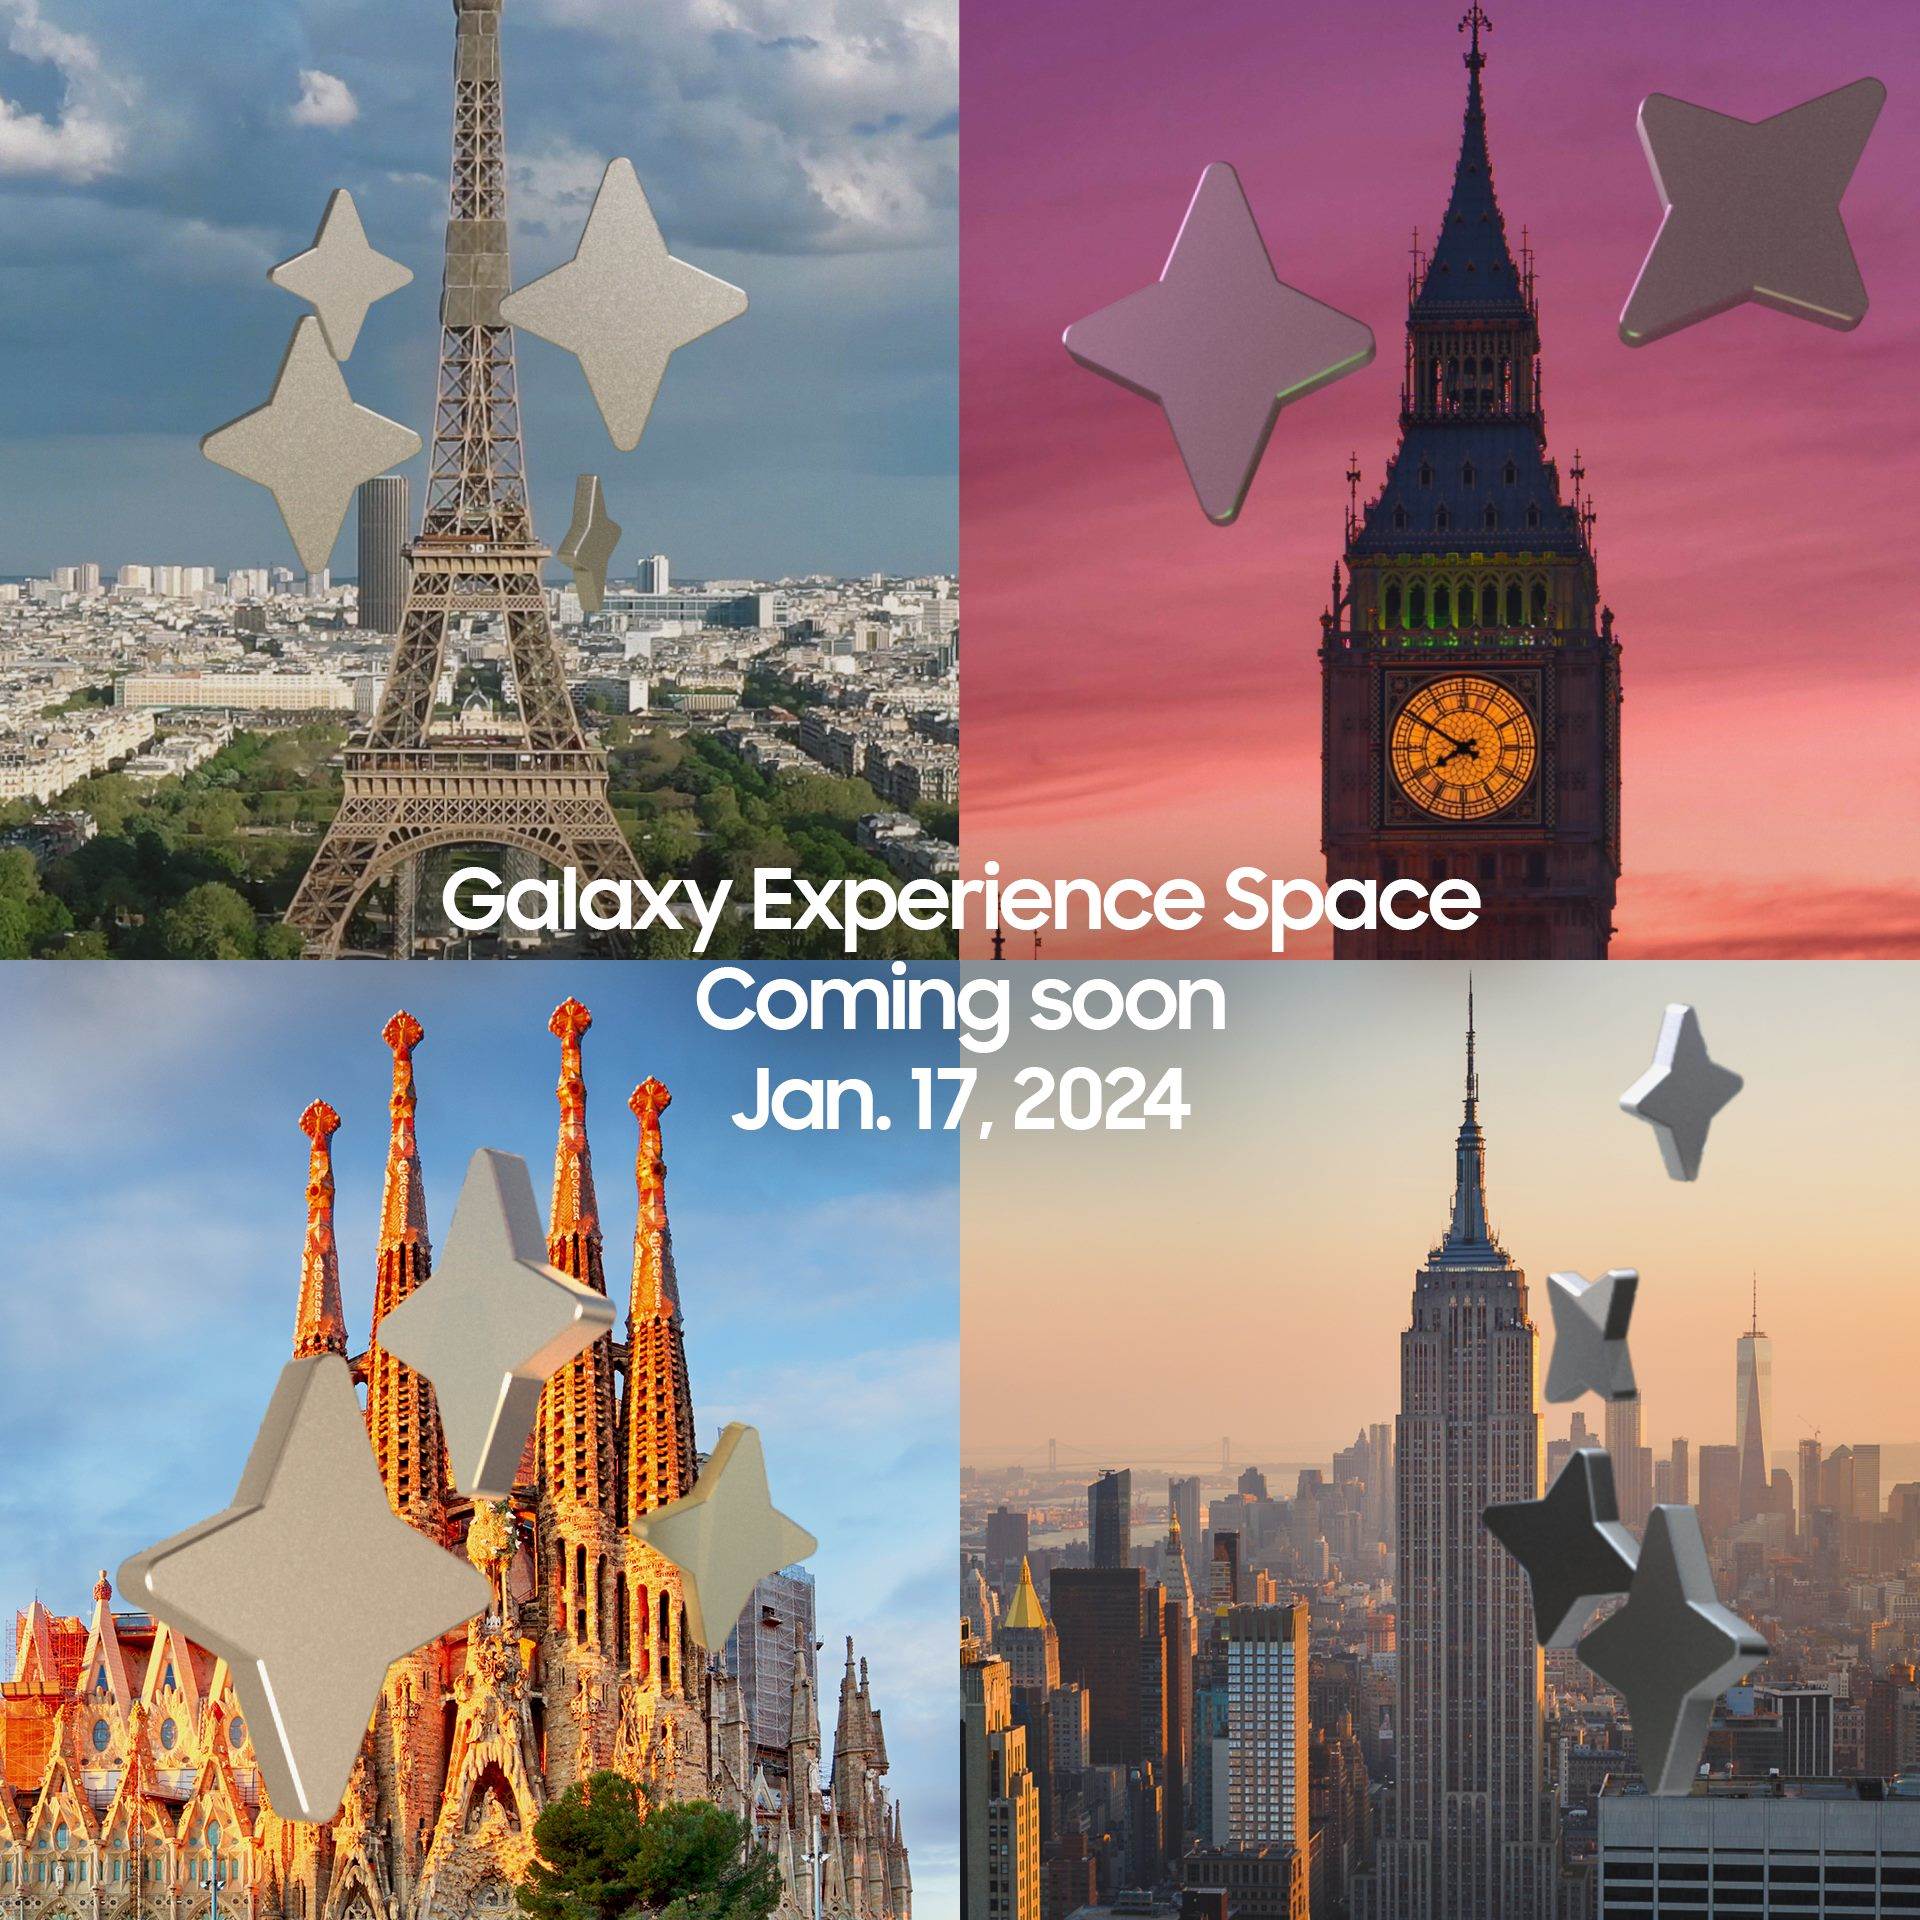  Galaxy Experience Spaces_Teaser.jpg 